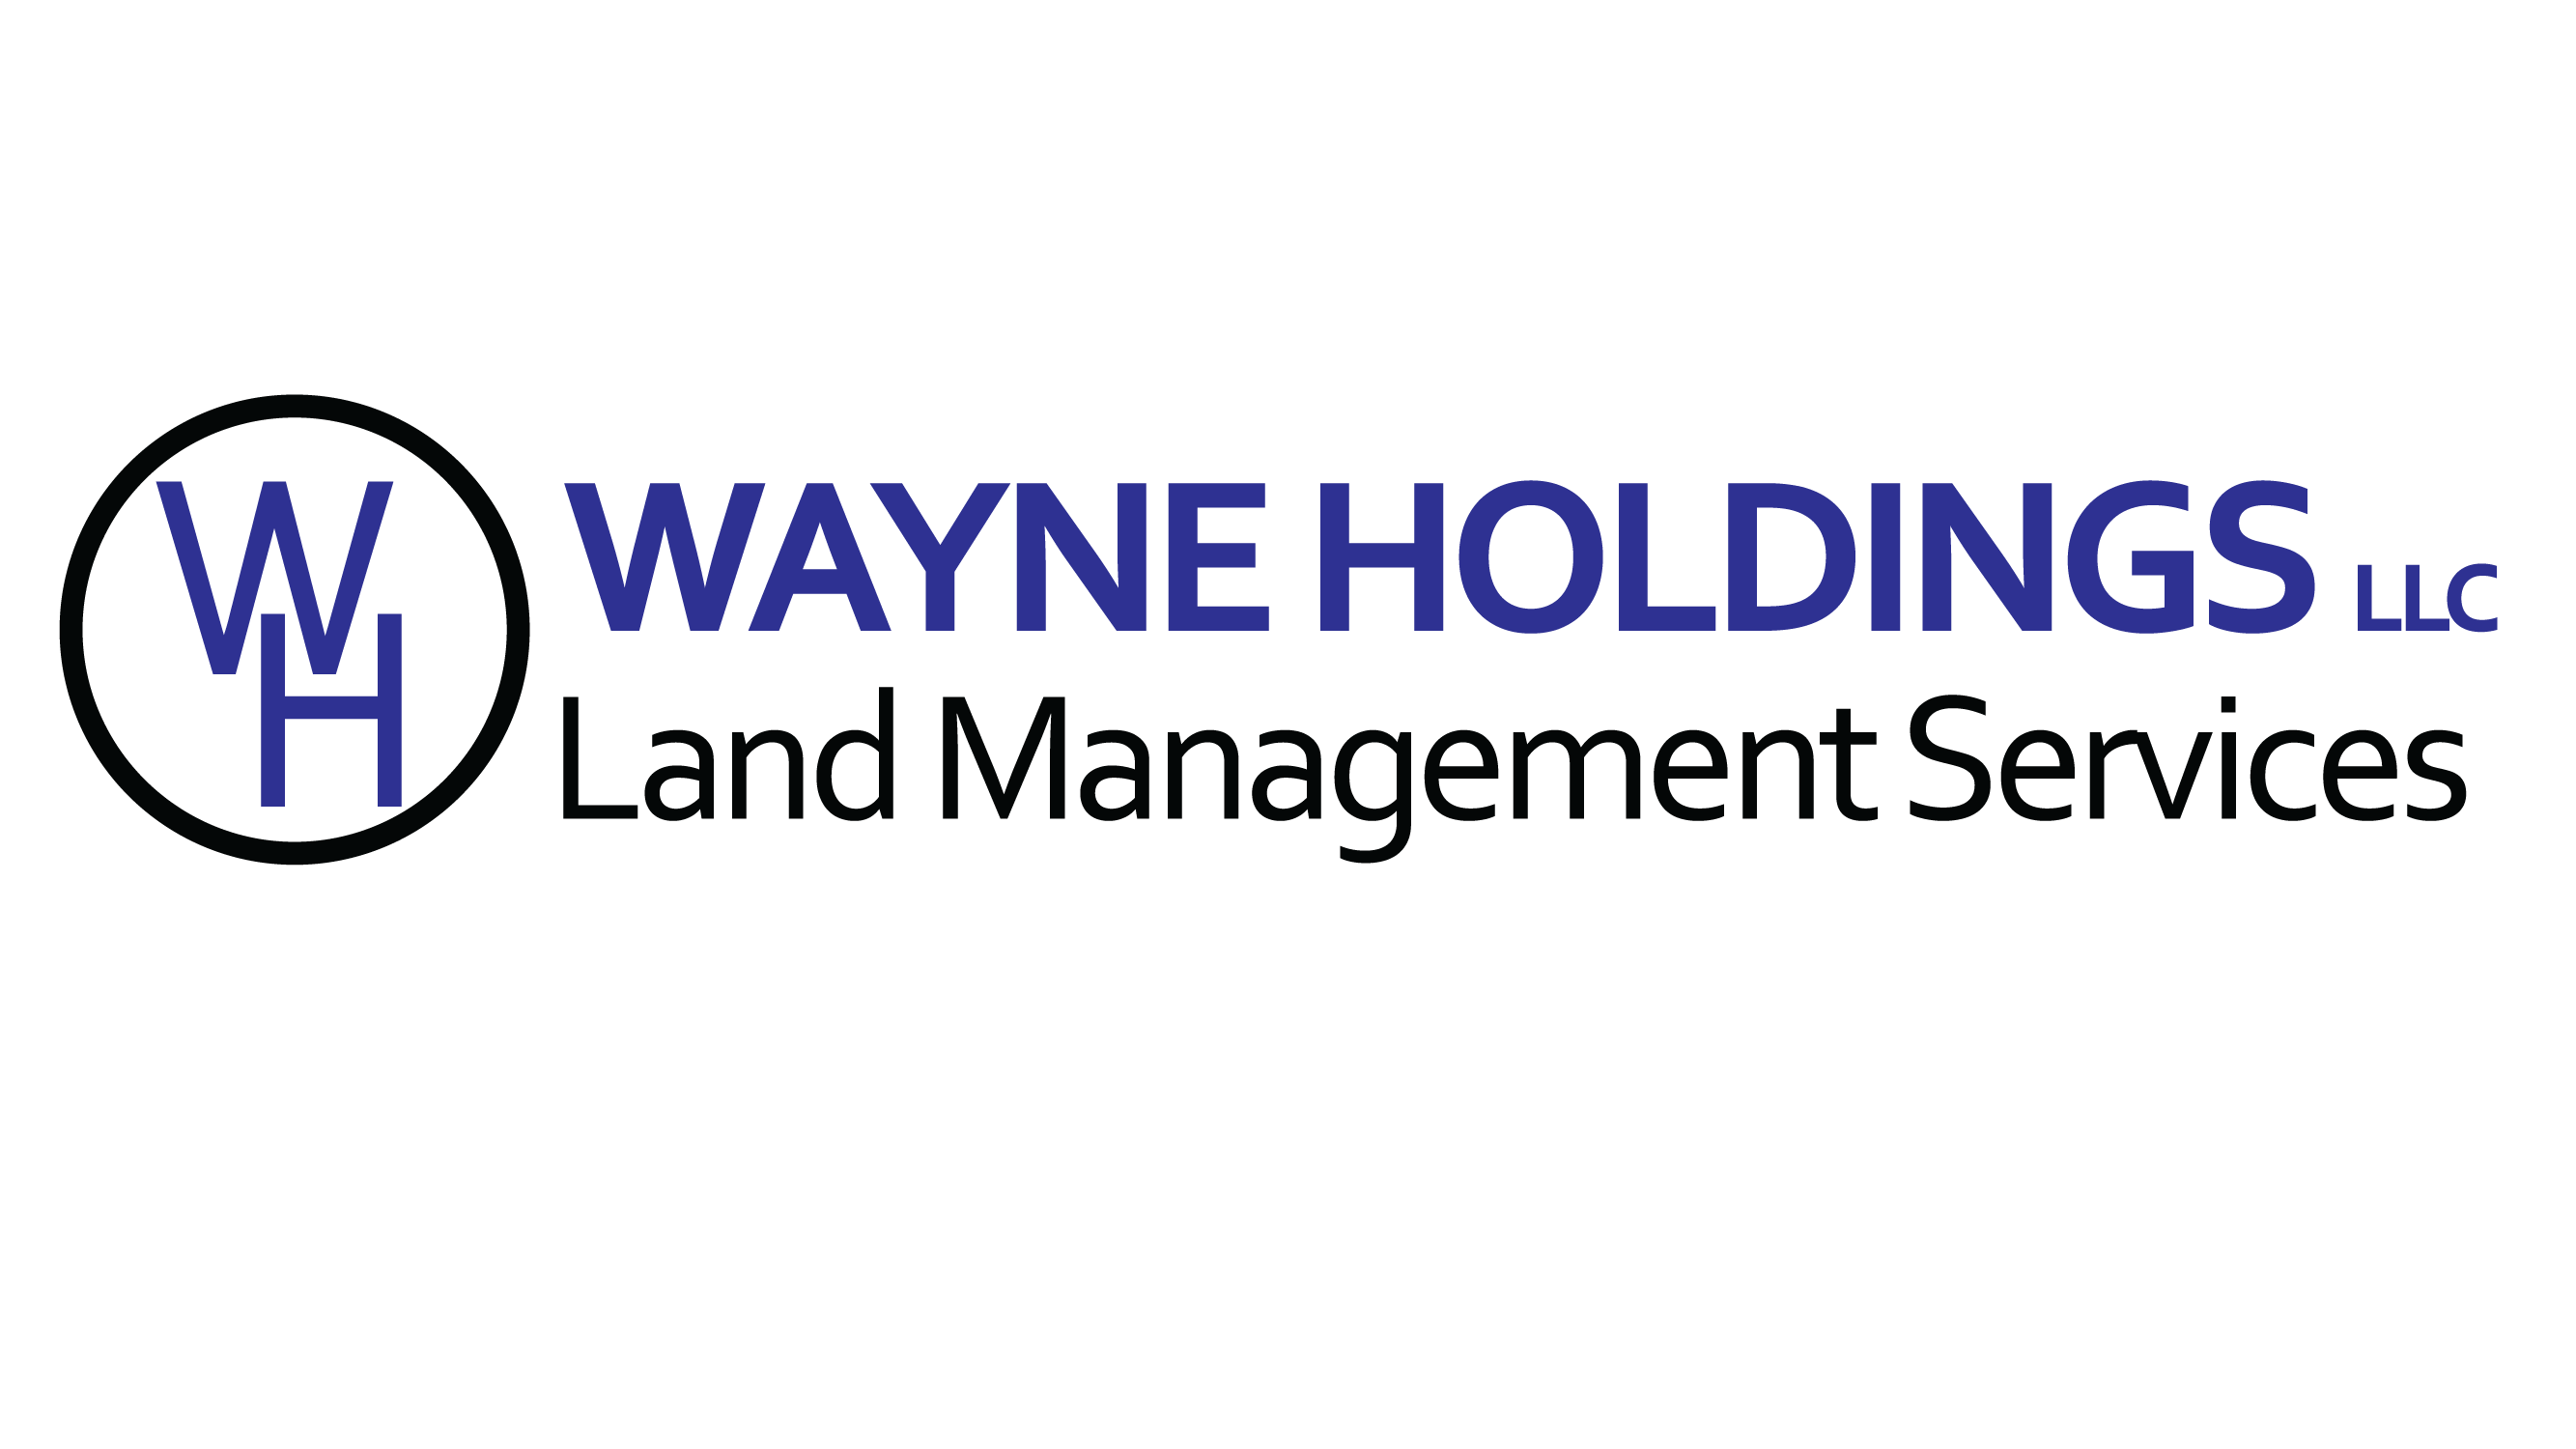 Wayne Holdings, LLC